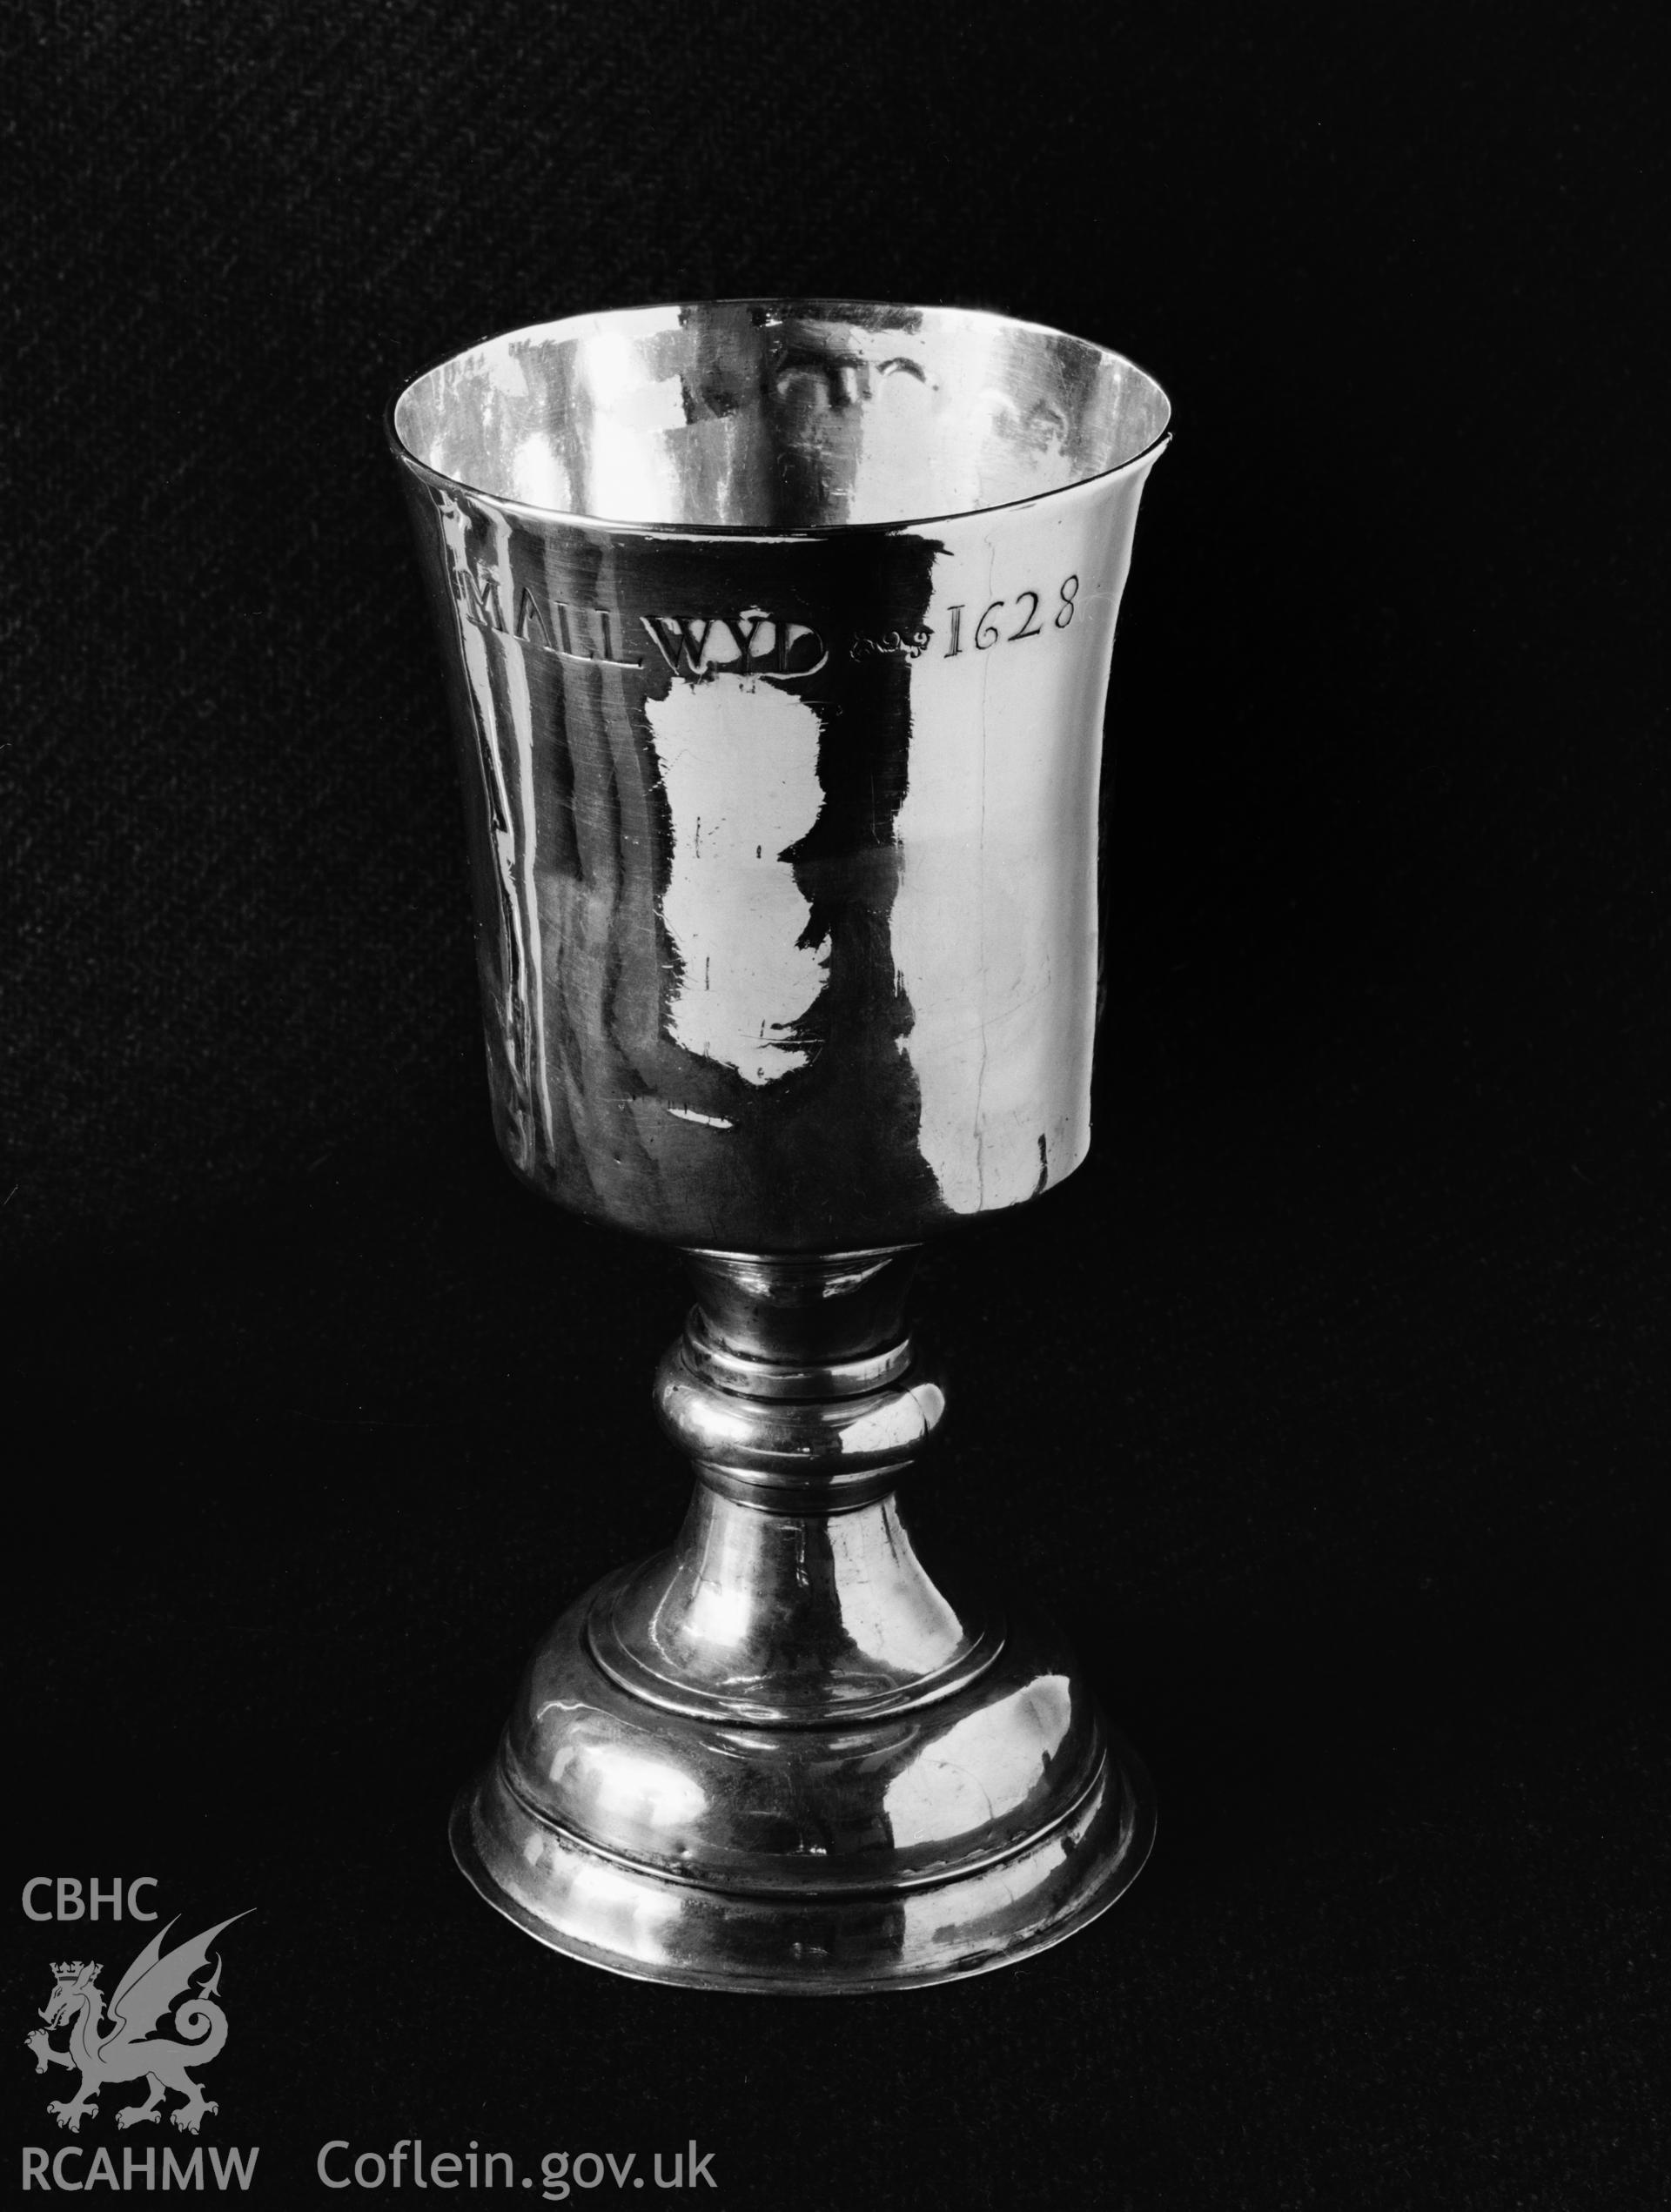 1628 chalice